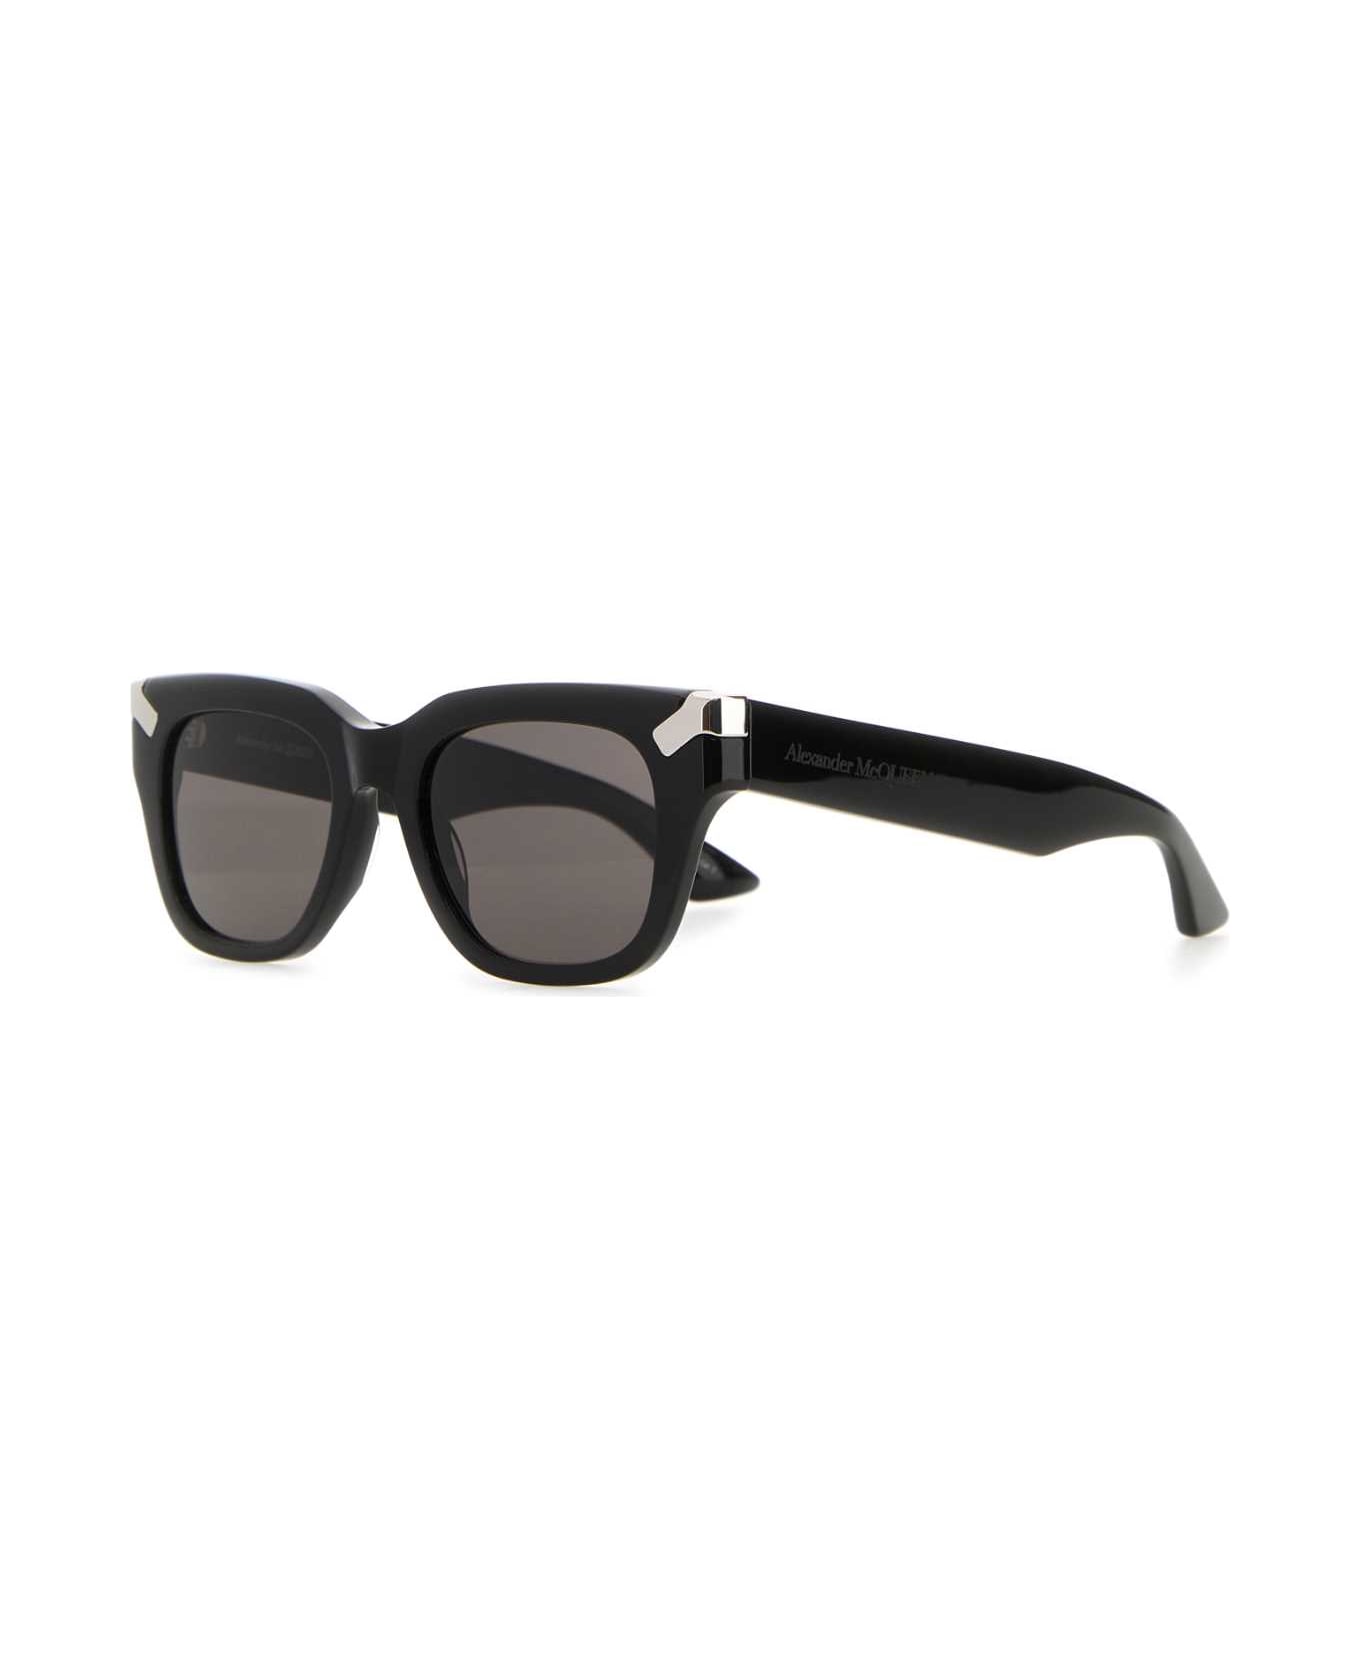 Alexander McQueen Black Acetate Punk Rivet Sunglasses - SOLIDGREY